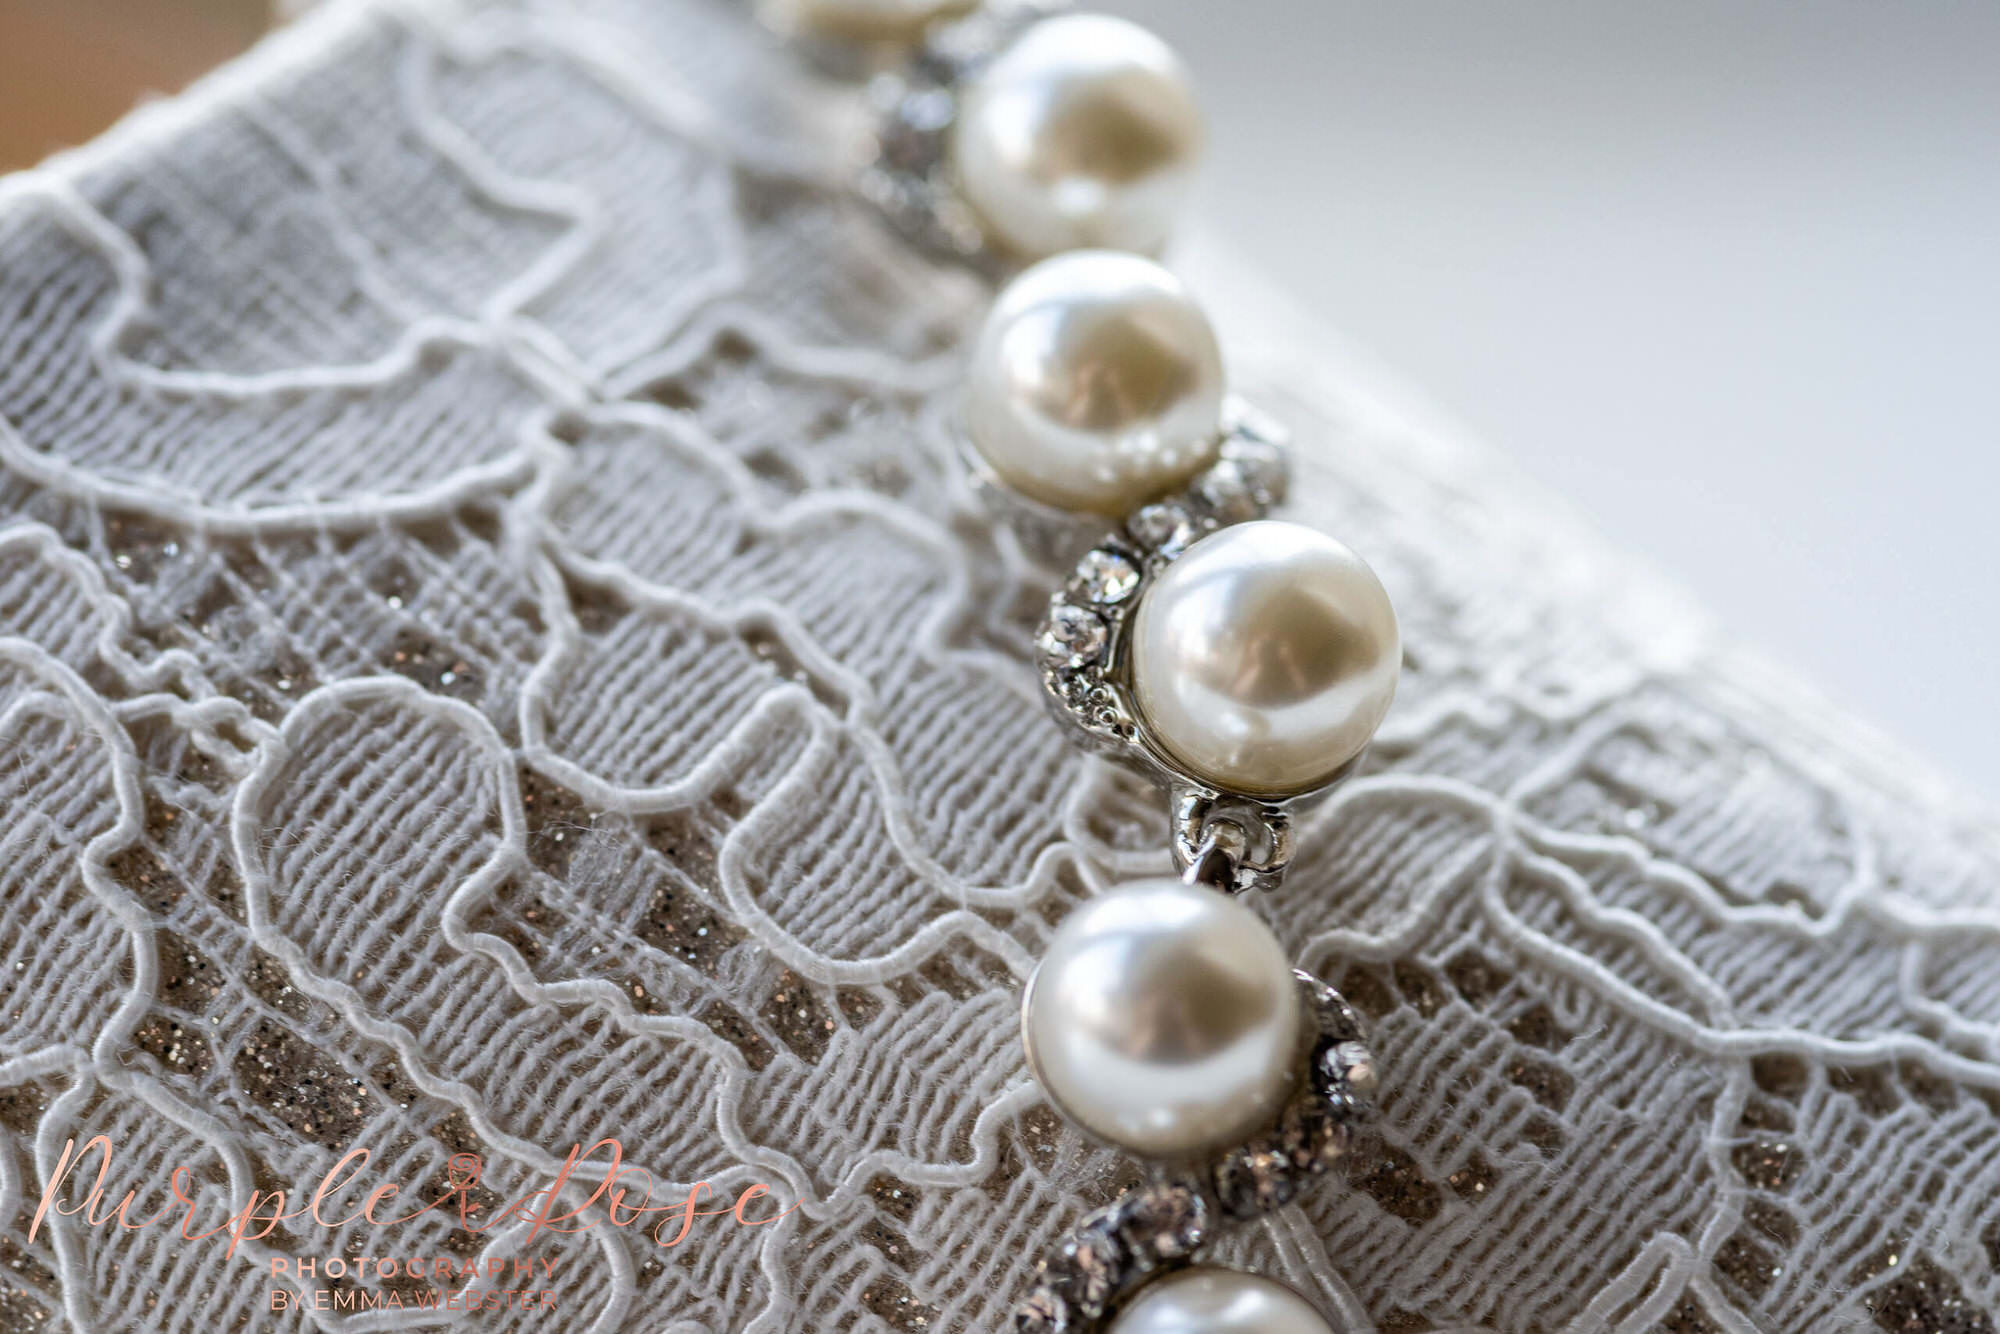 Pearl bracelet draped on lace shoes